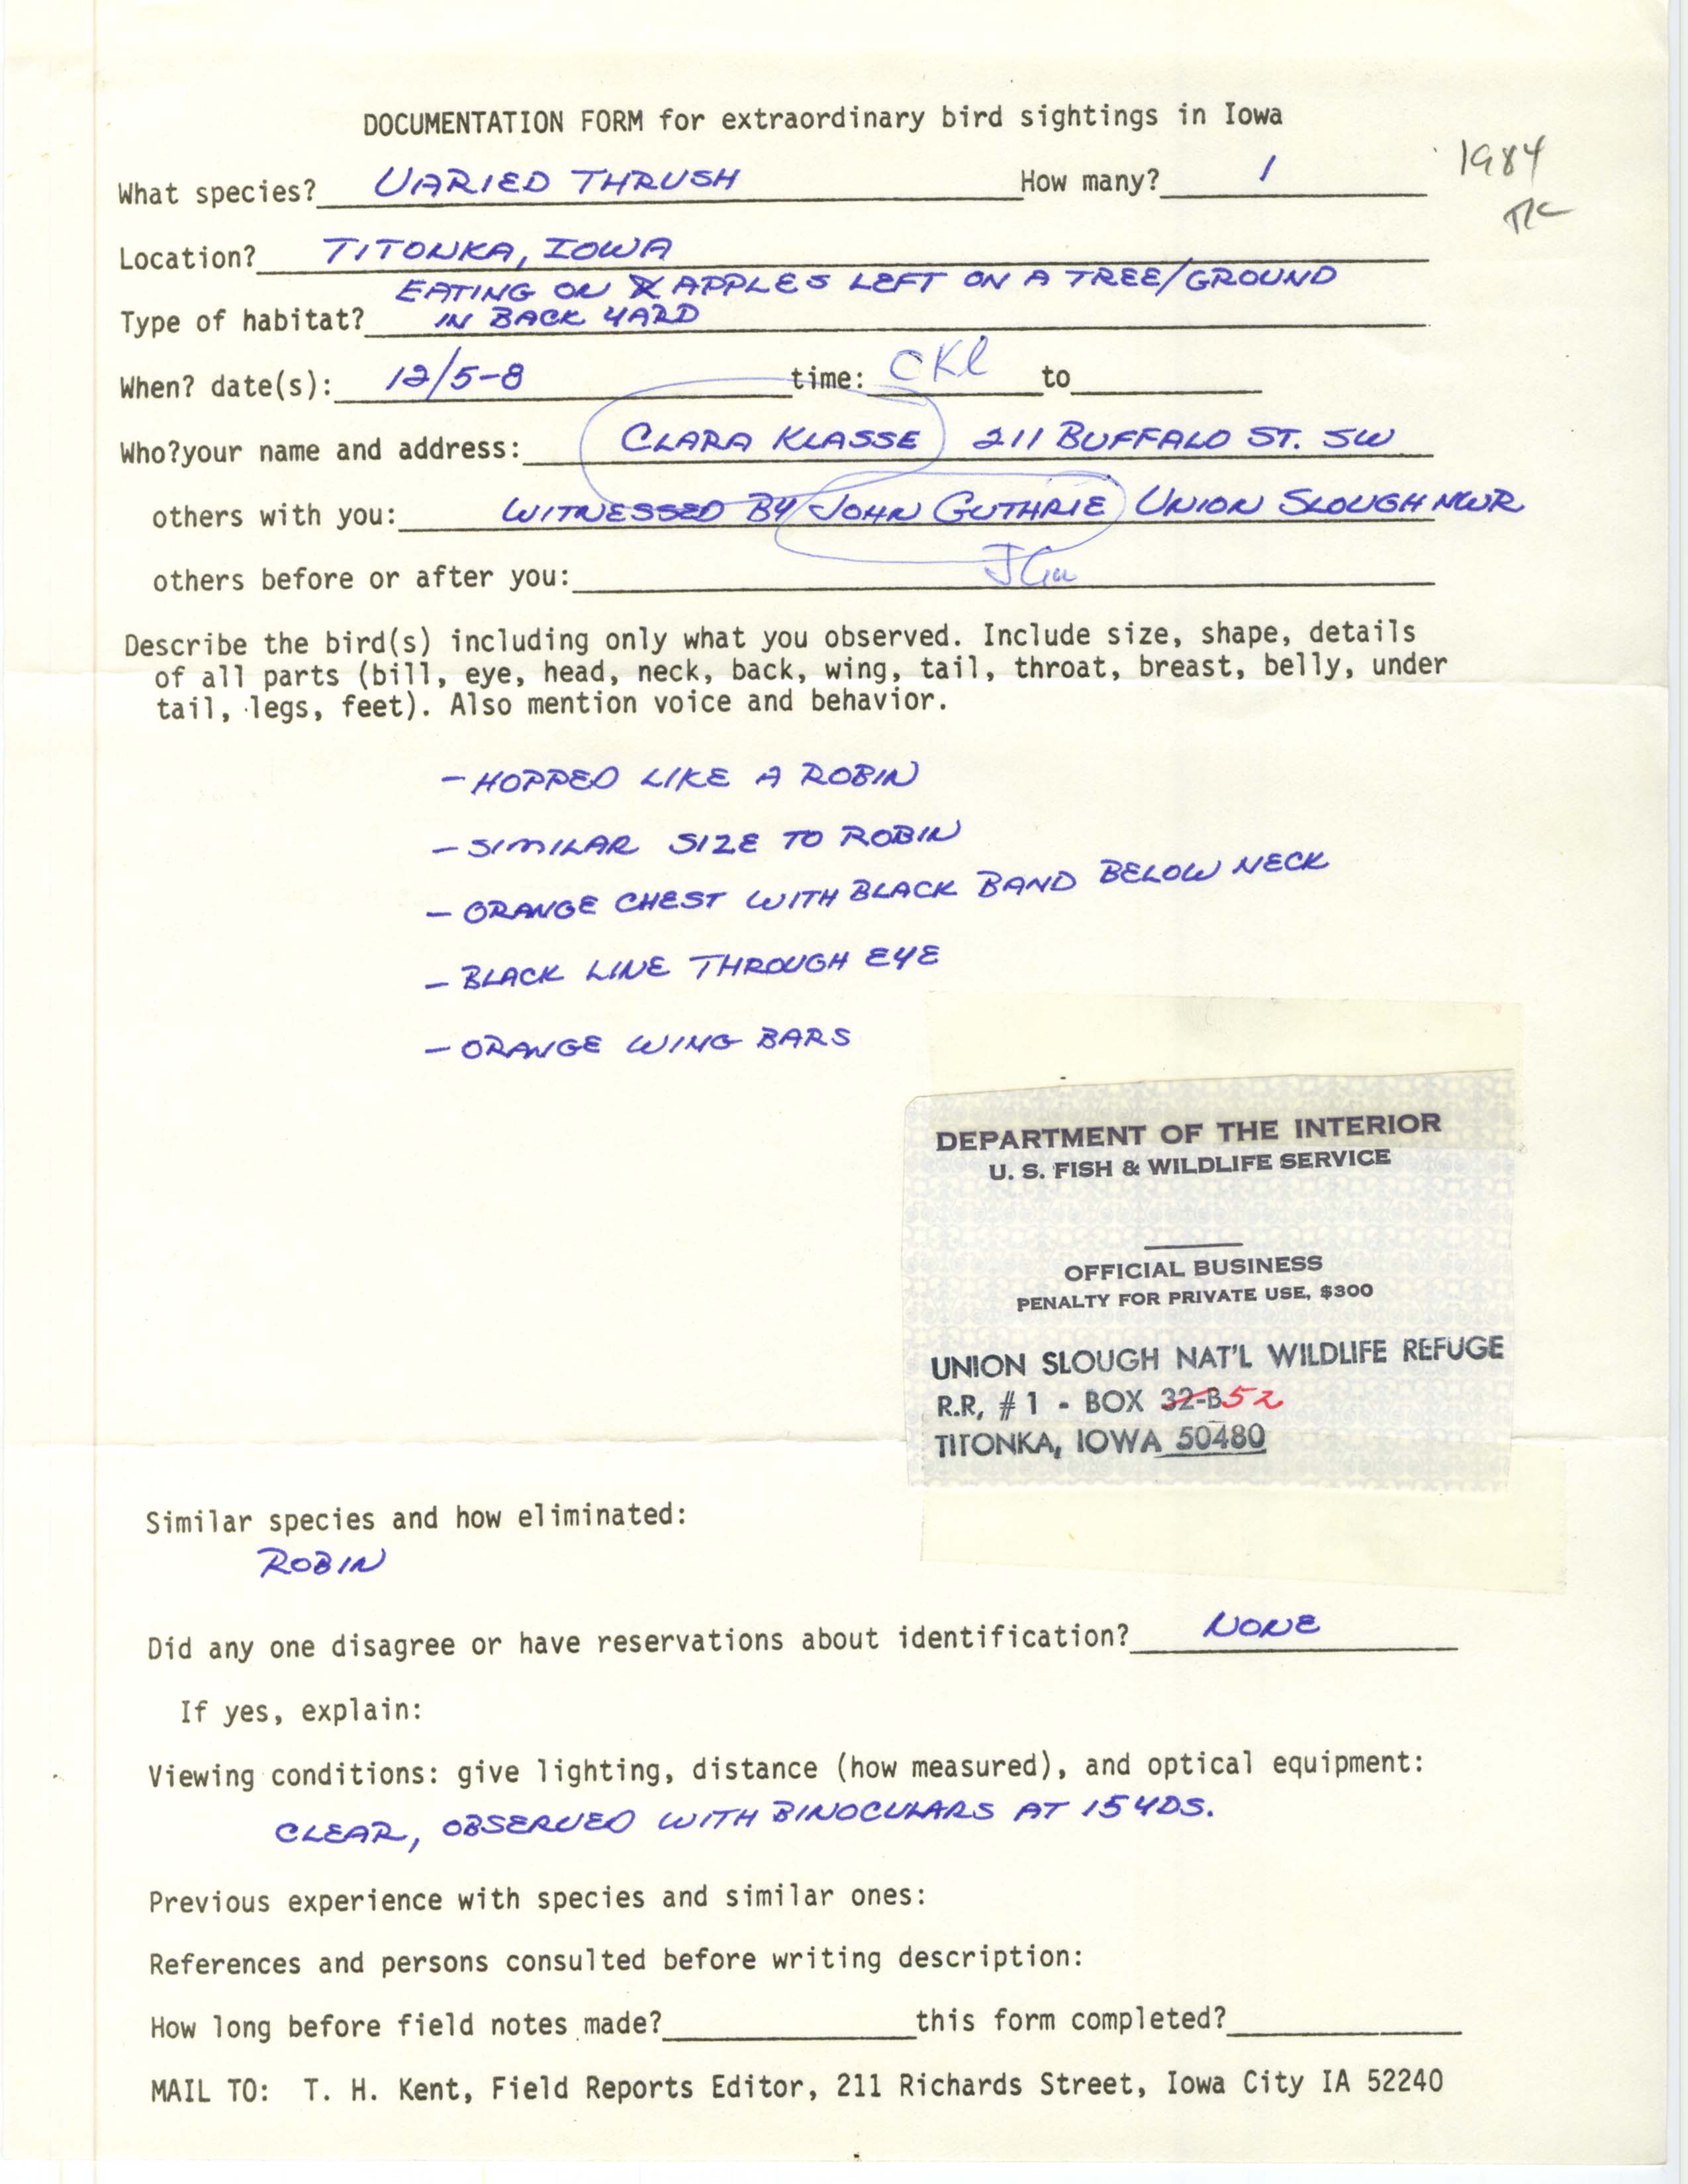 Rare bird documentation form for Varied Thrush at Titonka, 1984